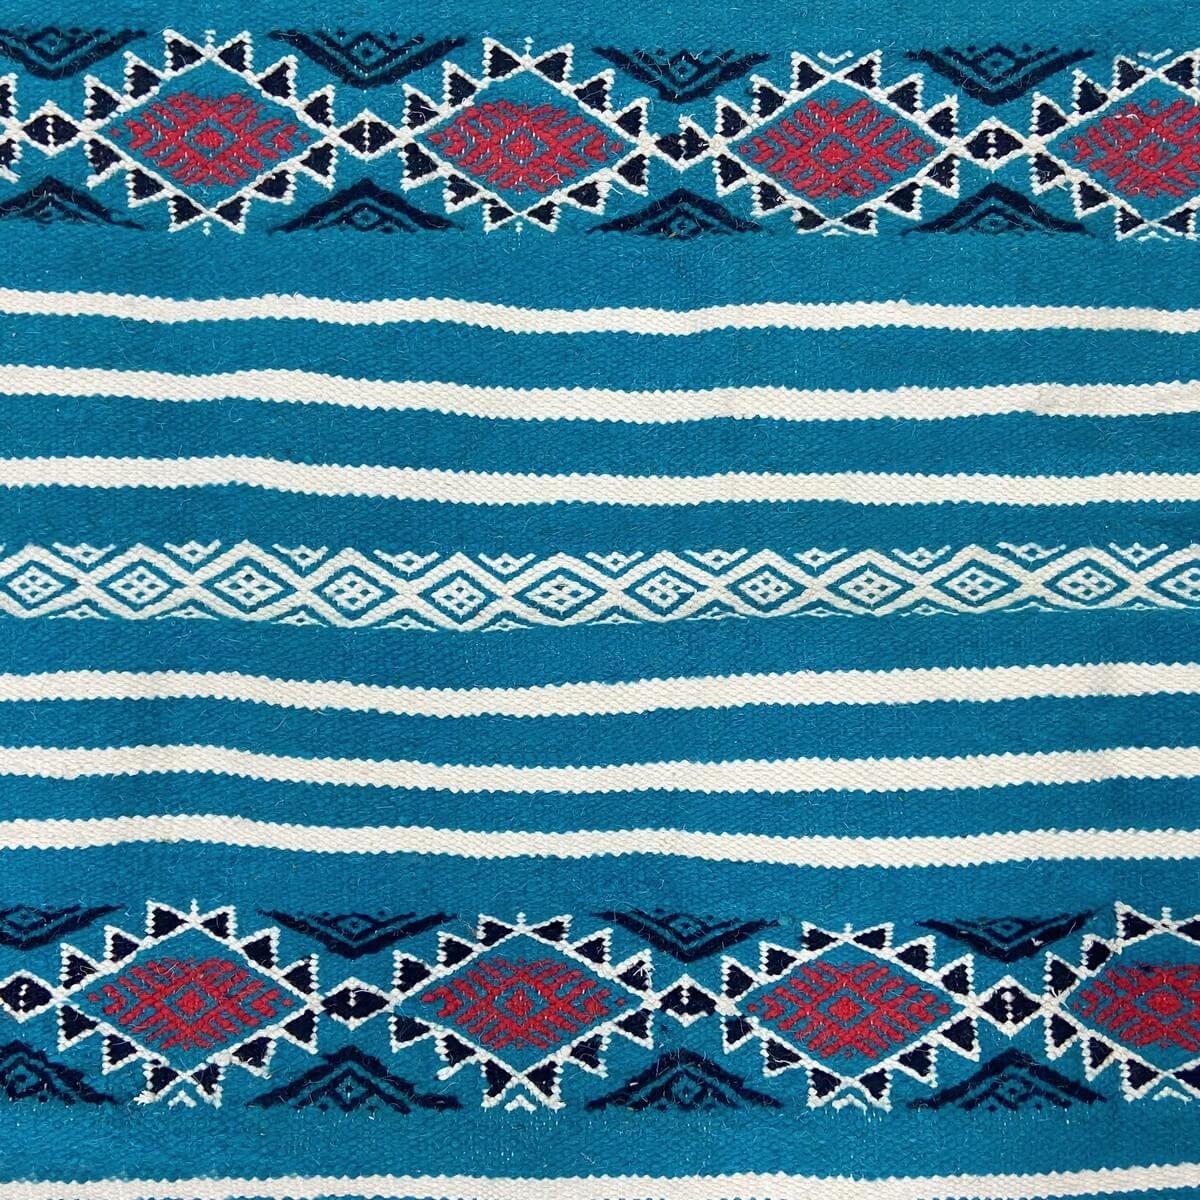 Berber carpet Rug Kilim Emder 107x140 Blue turquoise/Yellow/Red (Handmade, Wool) Tunisian Rug Kilim style Moroccan rug. Rectangu